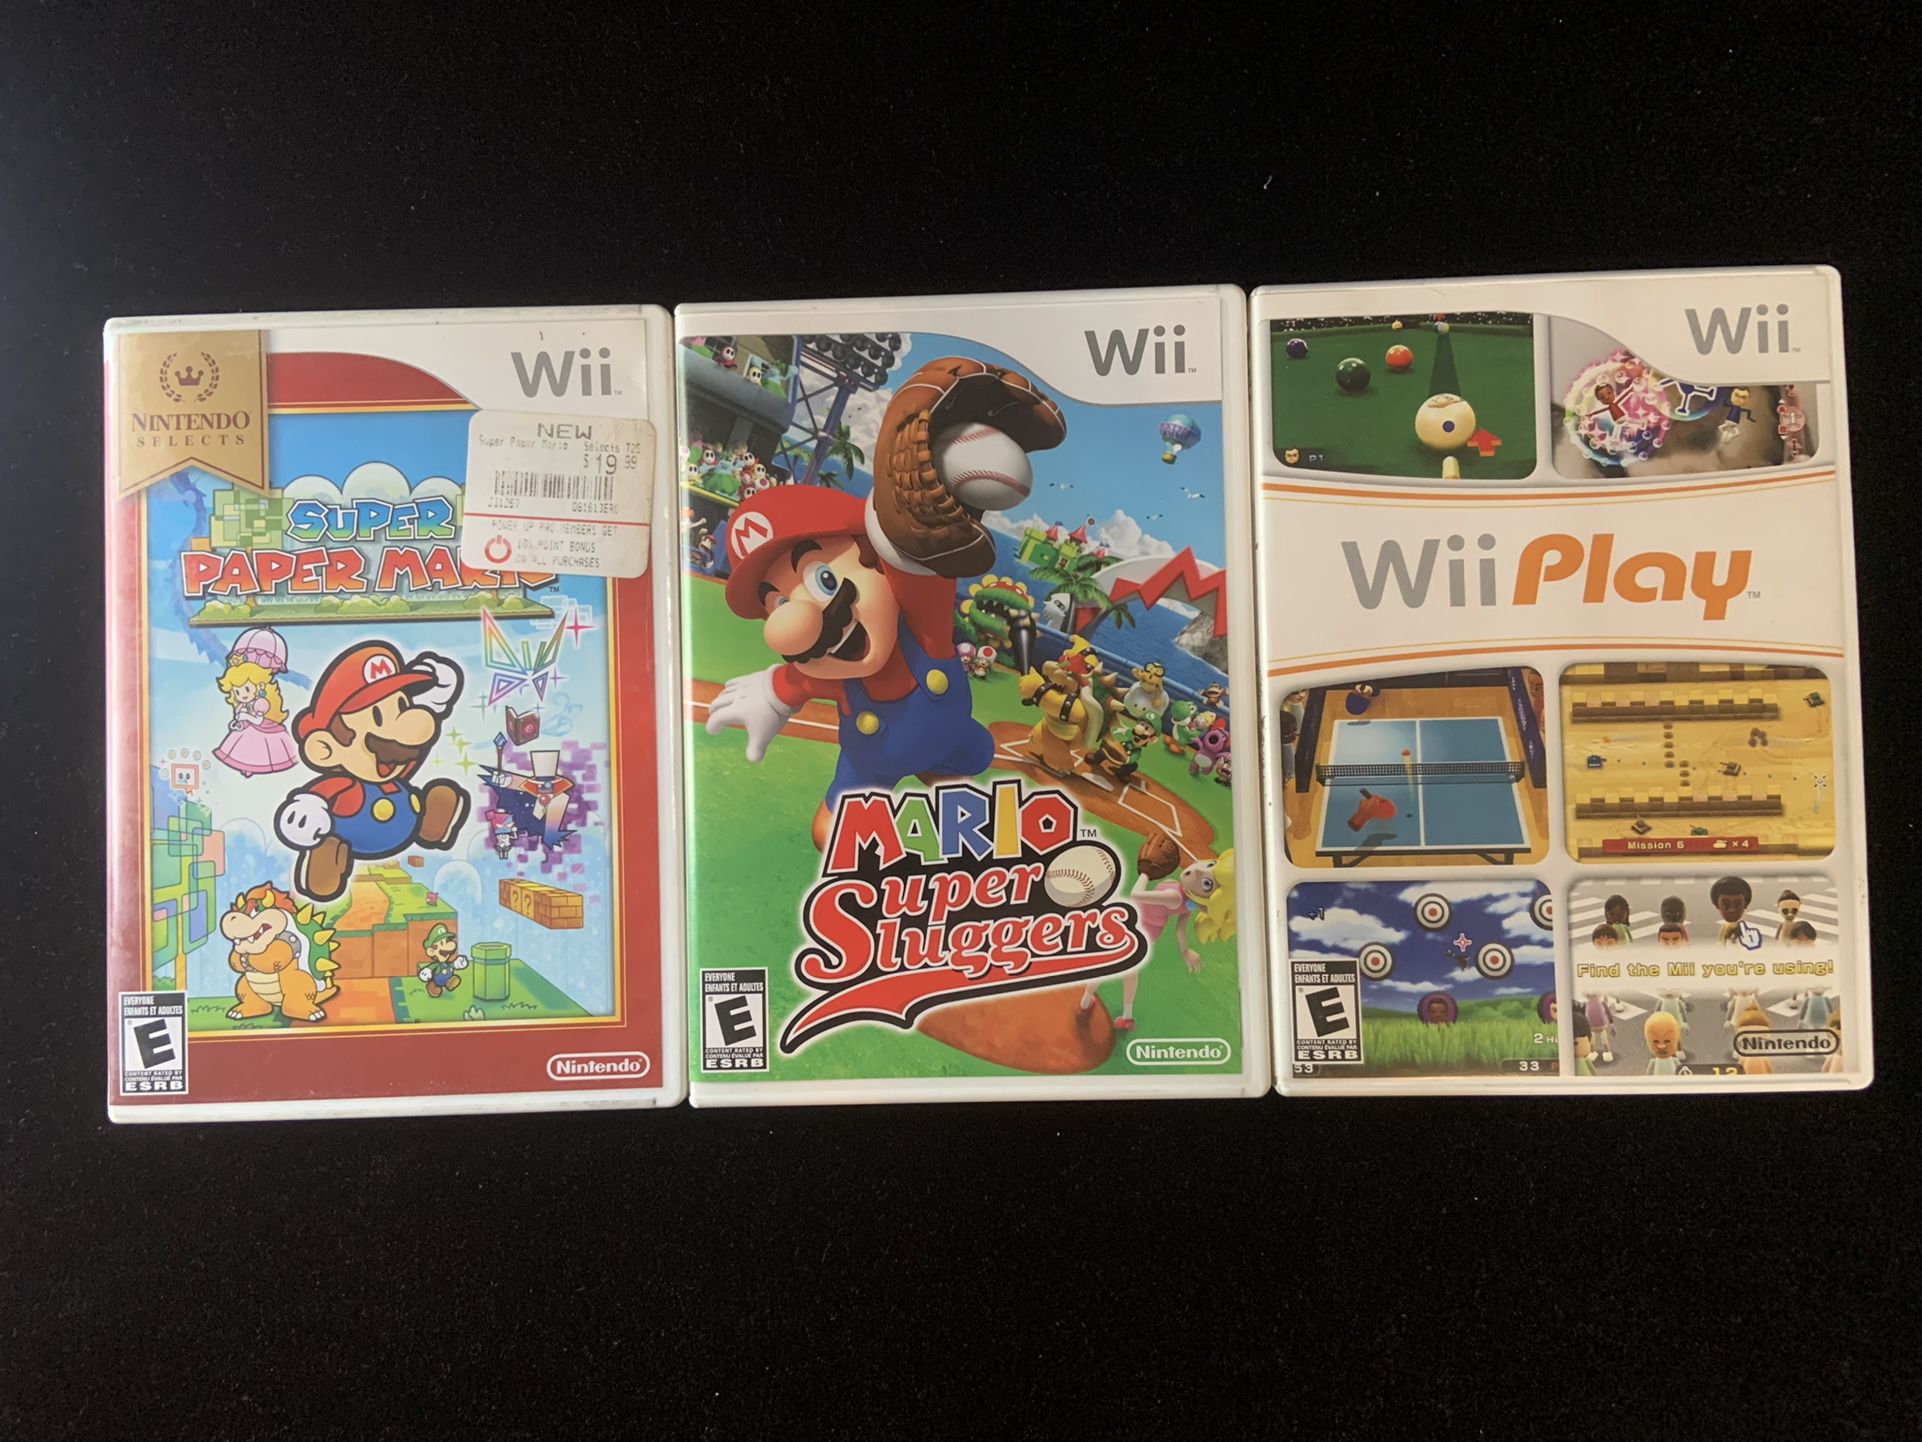 Nintendo Wii Video Game Lot of 3(SUPER PAPER MARIO MARIO SUPER SLUGGER WII PLAY)